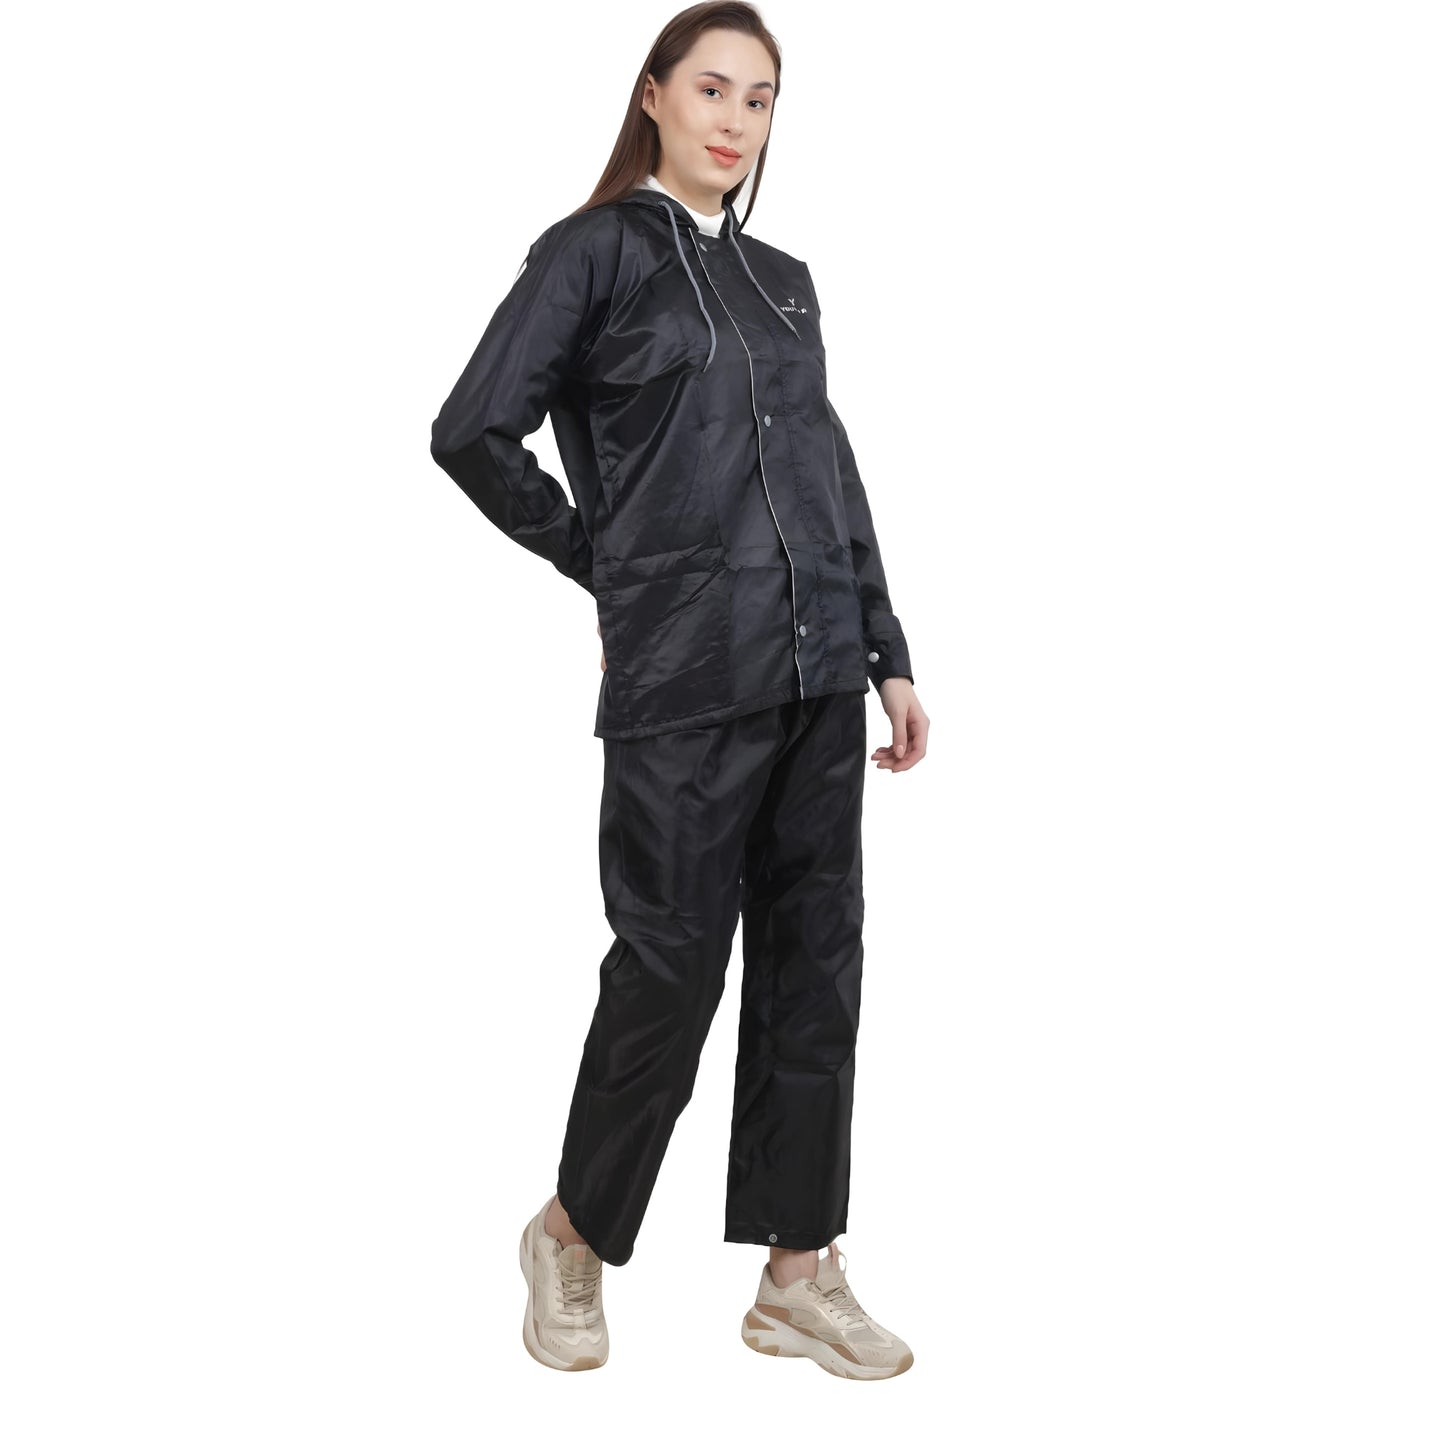 YOUTH ROBE Women's Raincoat - Black (Set)